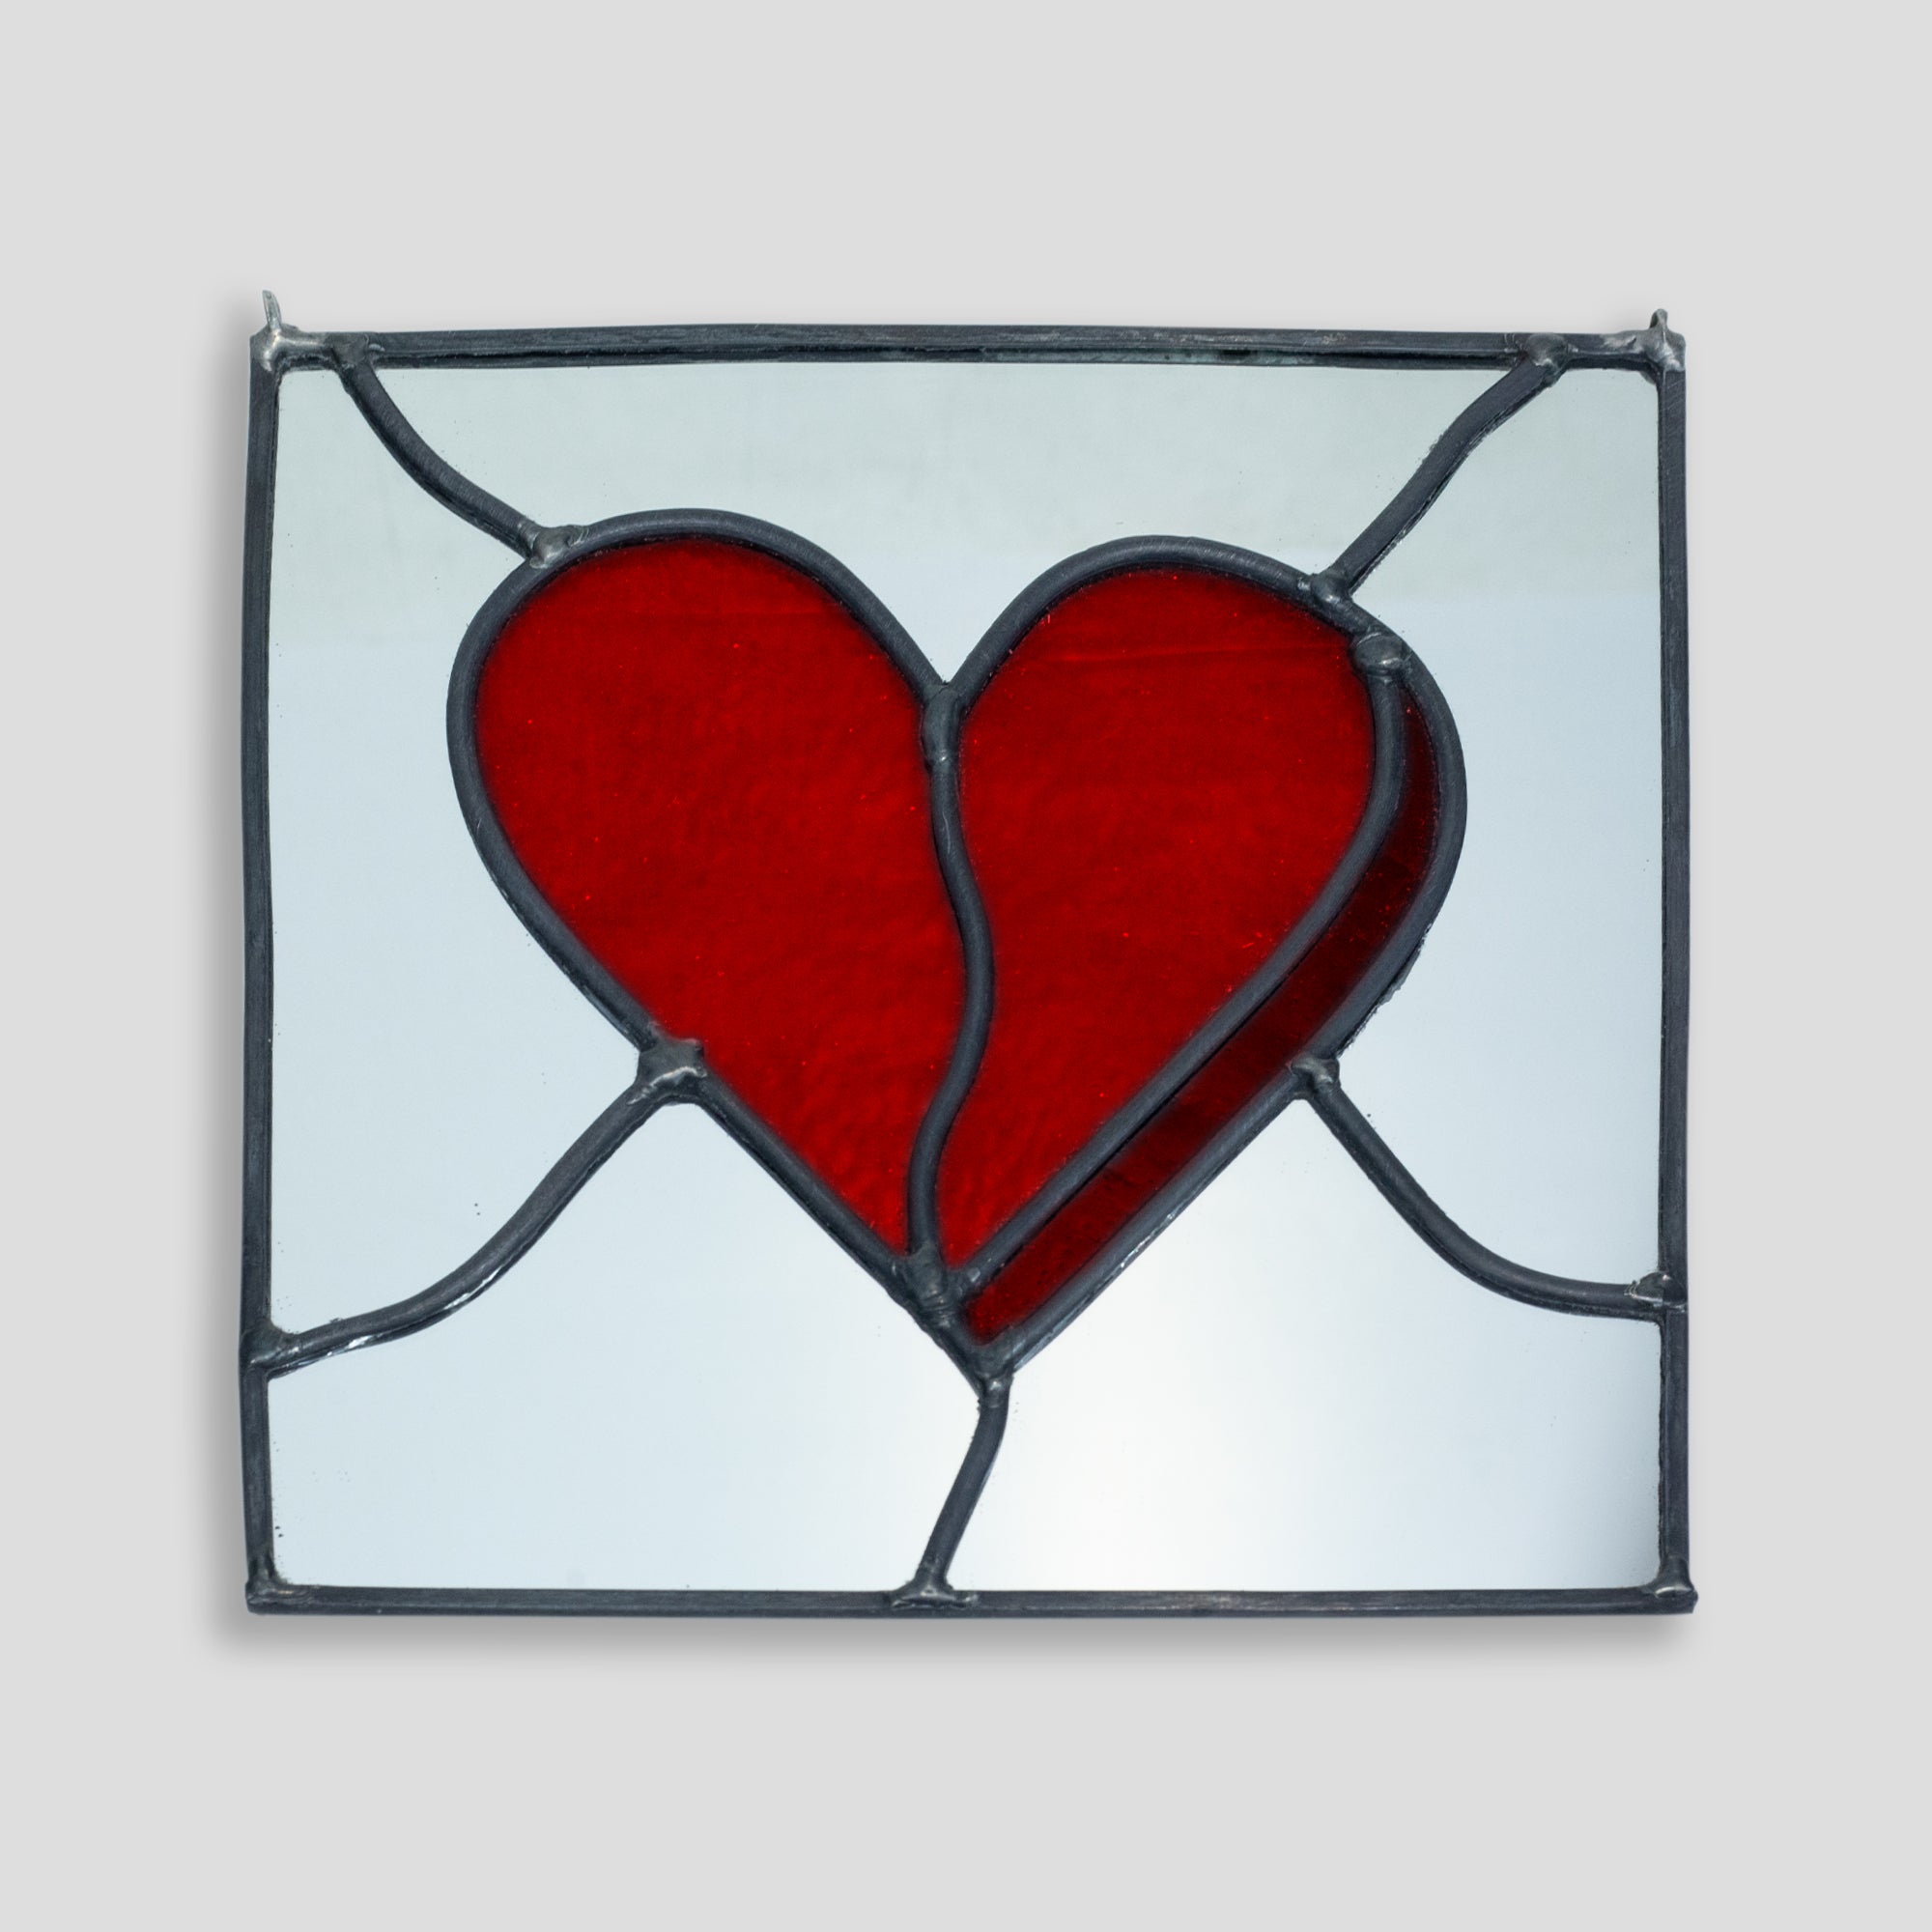 Sunroom Glass Mirror Mirror - "Broken Heart Mirror"